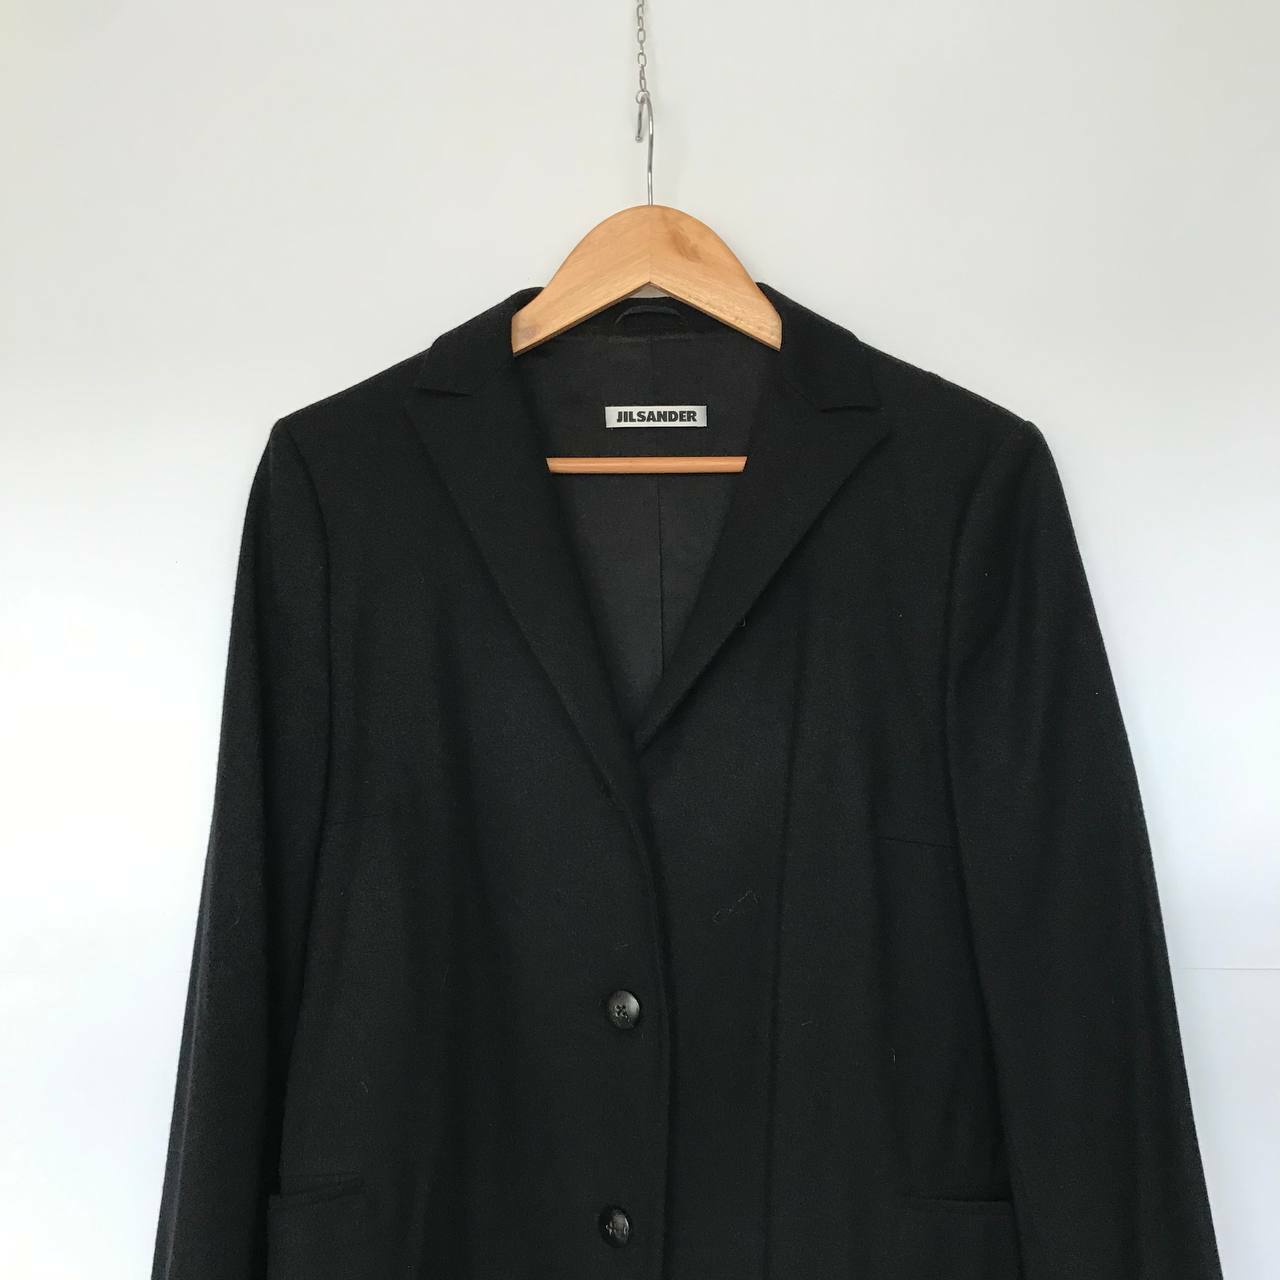 Kreunt opschorten moreel Jil Sander Vintage Women's Wool Cashmere Blend Black Blazer Jacket Size 42  Italy | eBay